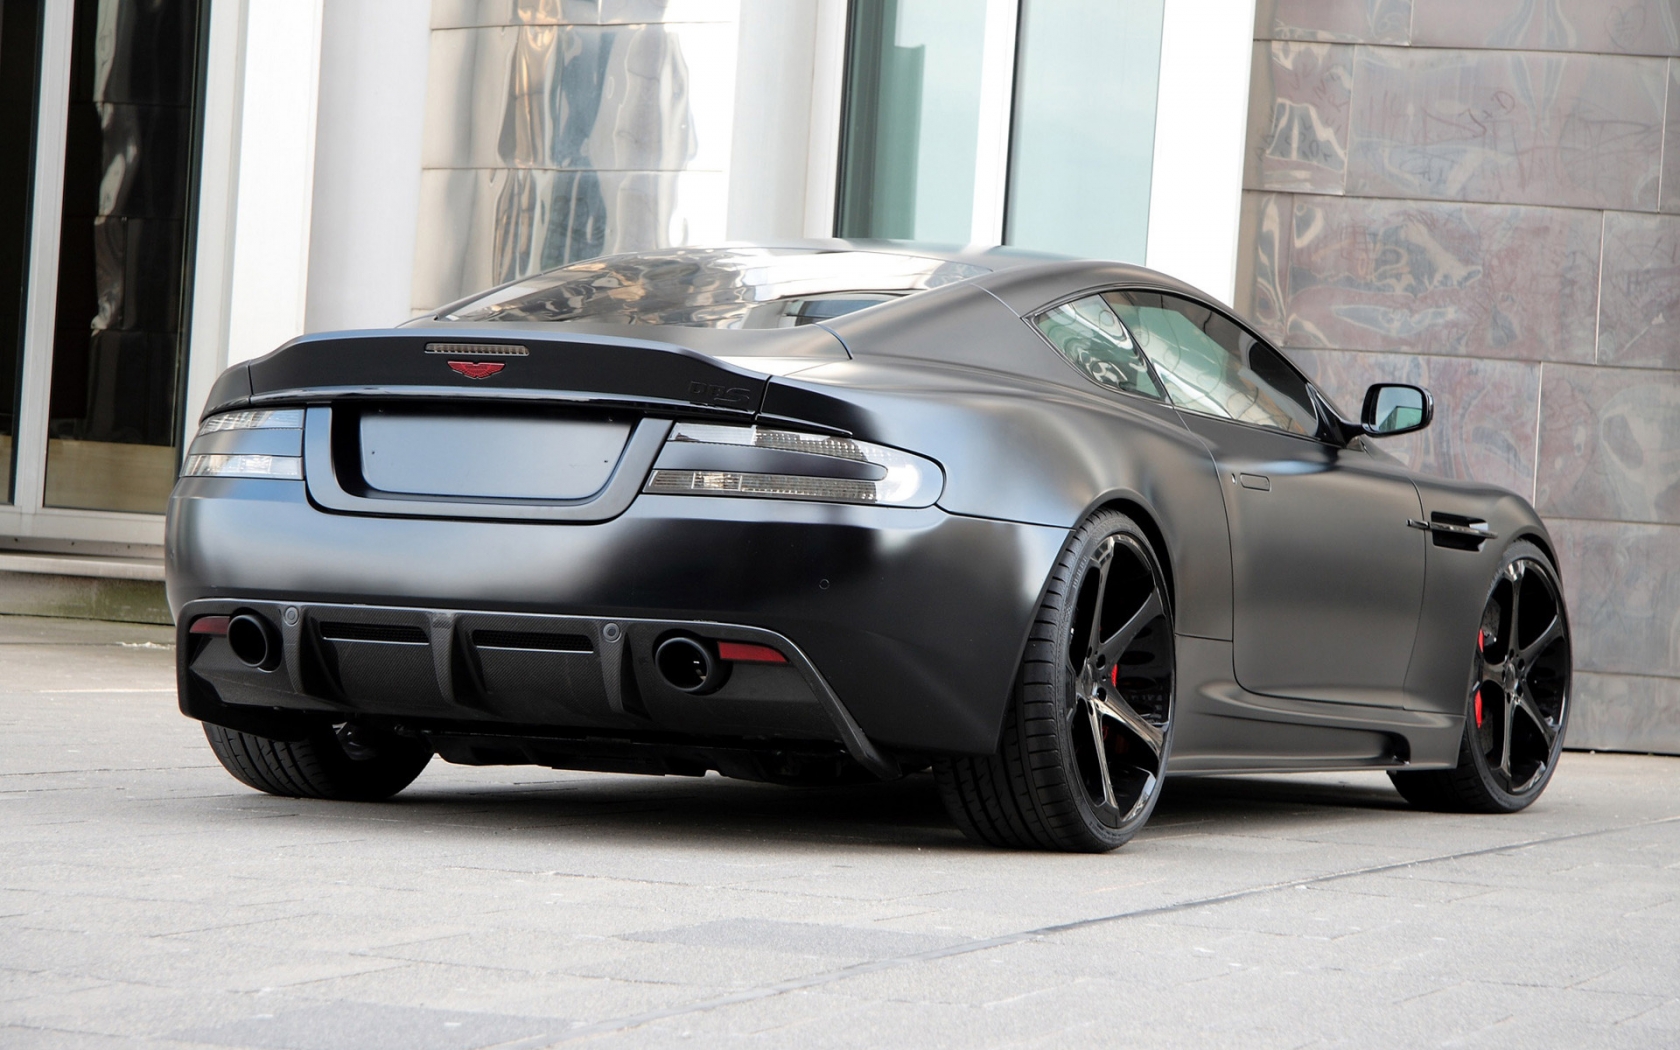 Aston Martin DBS Superior Black Edition Rear for 1680 x 1050 widescreen resolution